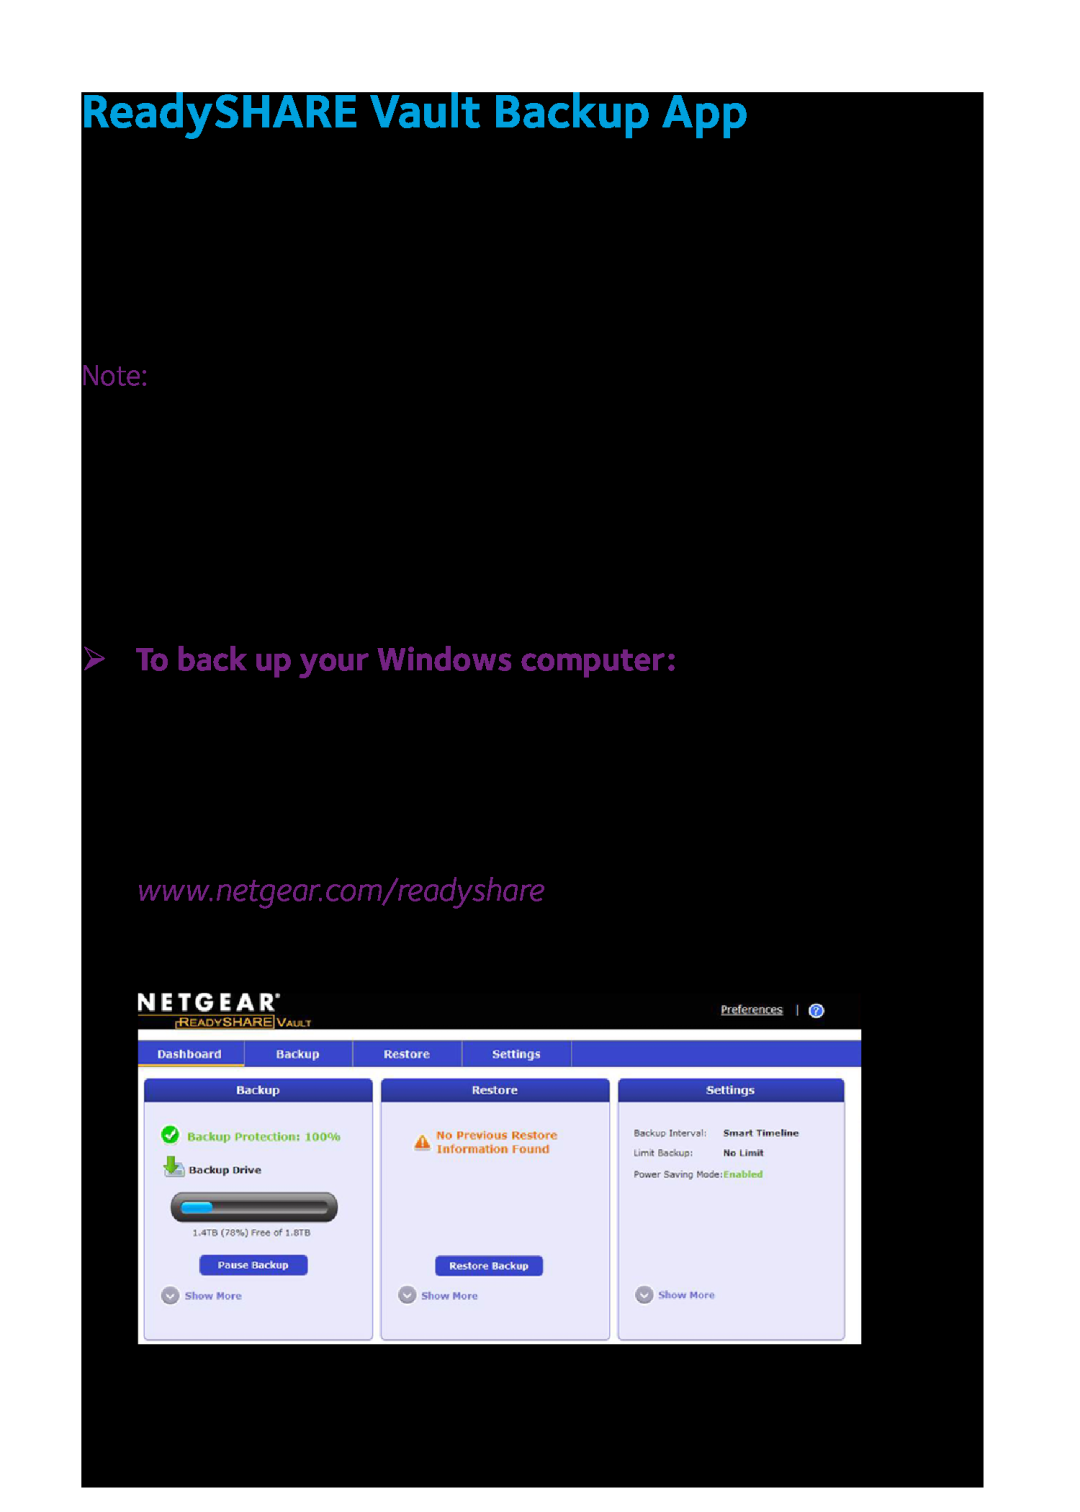 NETGEAR R8000 quick start ReadySHARE Vault Backup App, ¾¾ To back up your Windows computer 